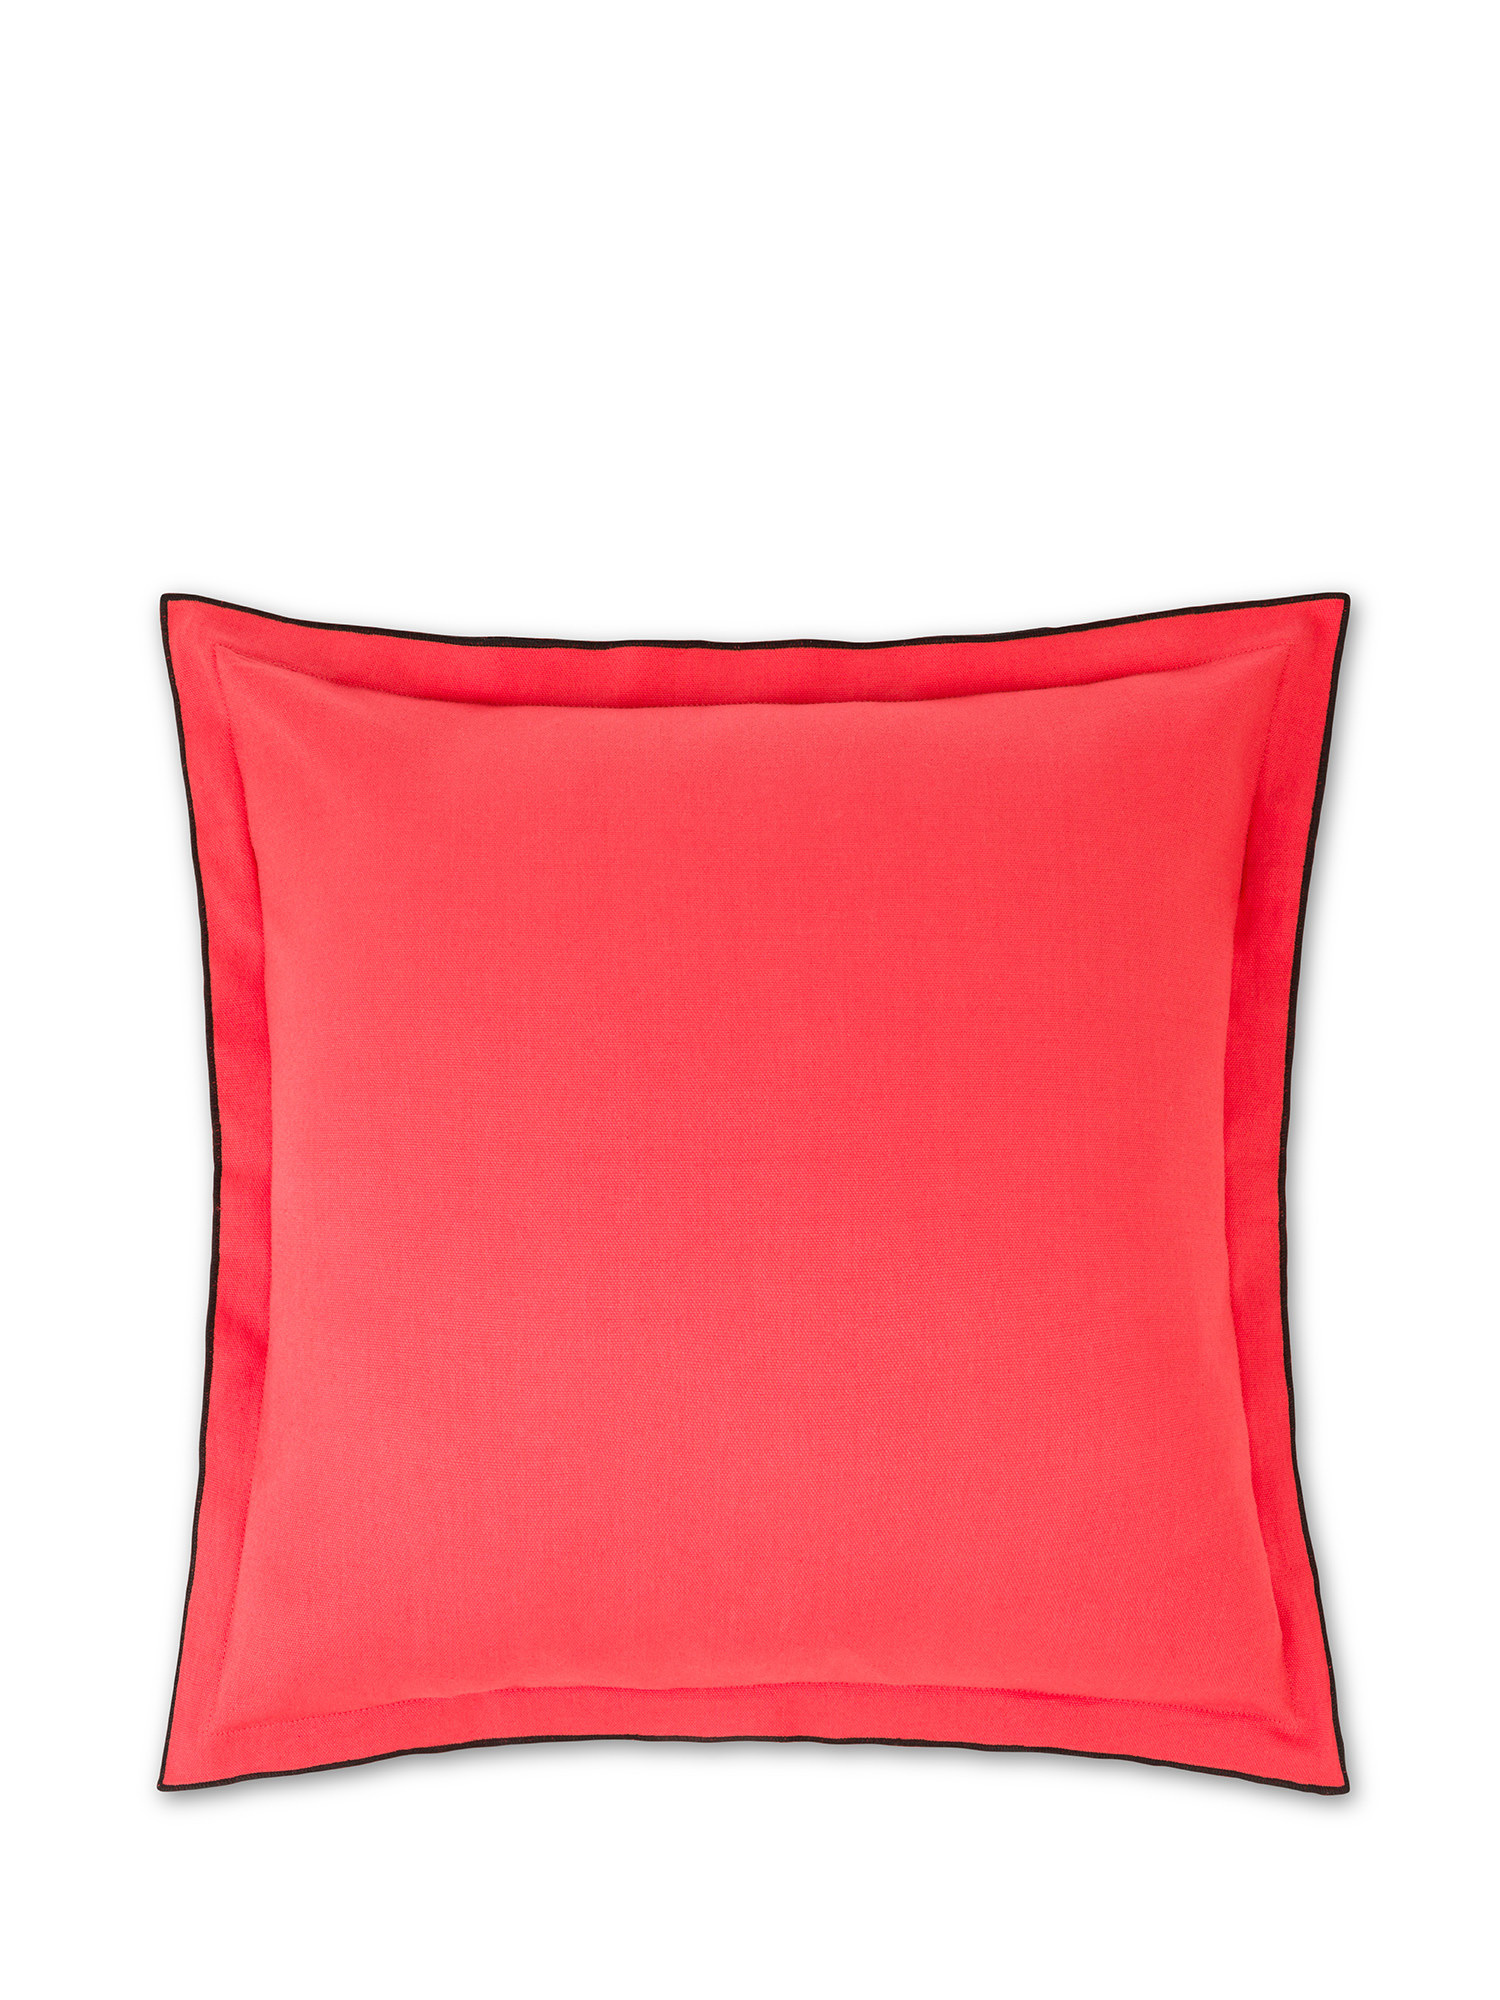 Cuscino cotone con bordo overlock 45x45cm, Rosso, large image number 0